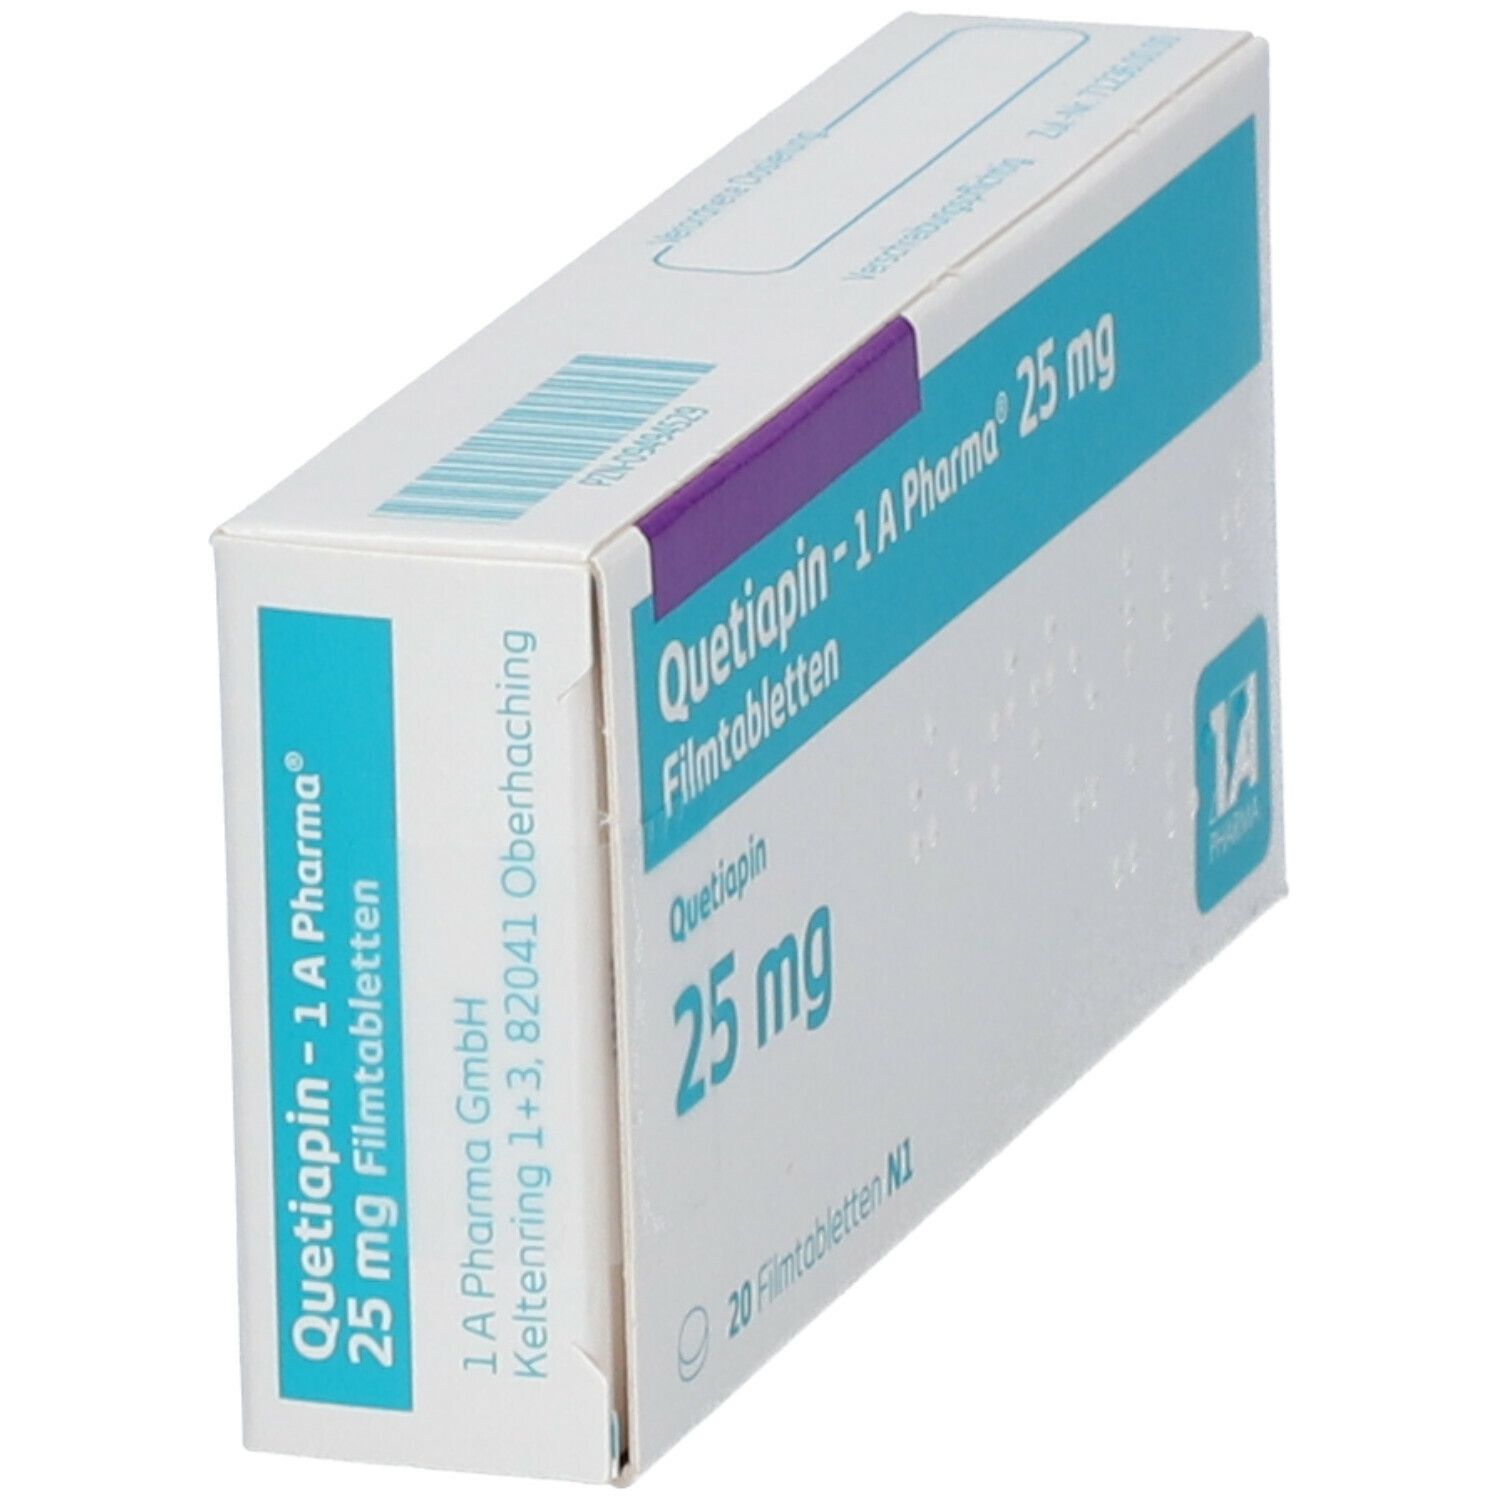 Quetiapin 1A Pharma® 25Mg